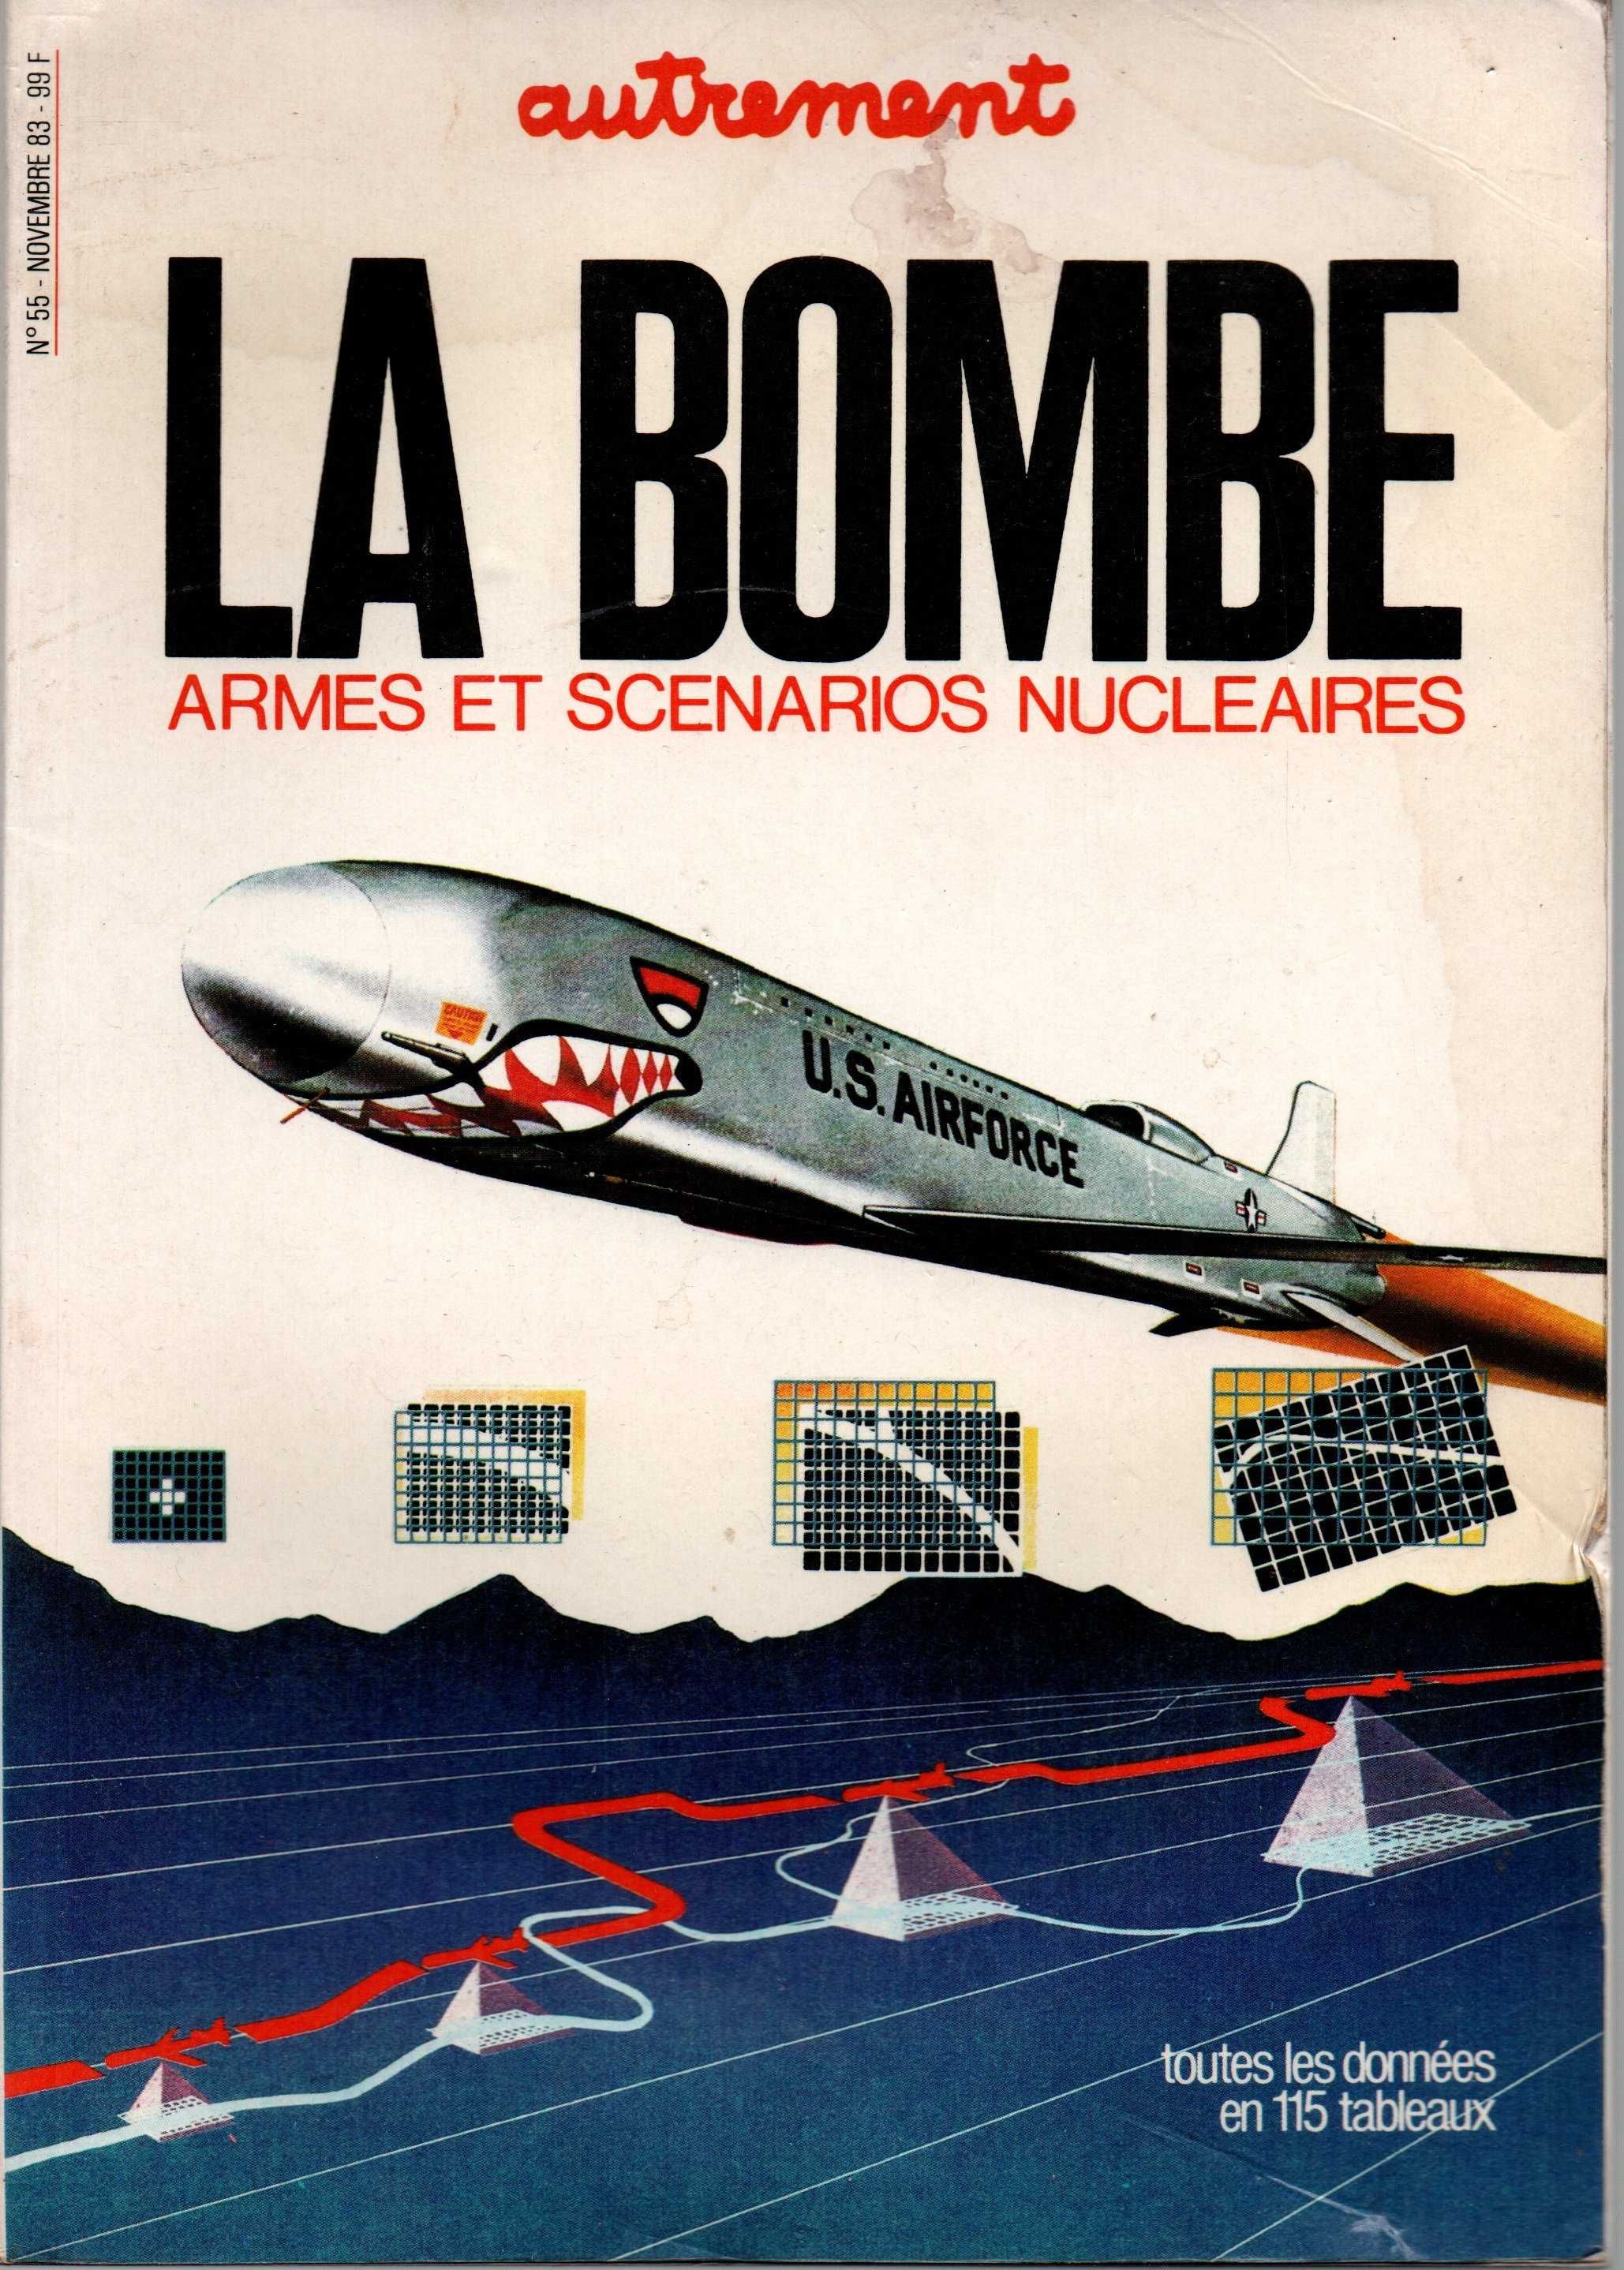 La Bombe. Armes et scenarios nucleaires